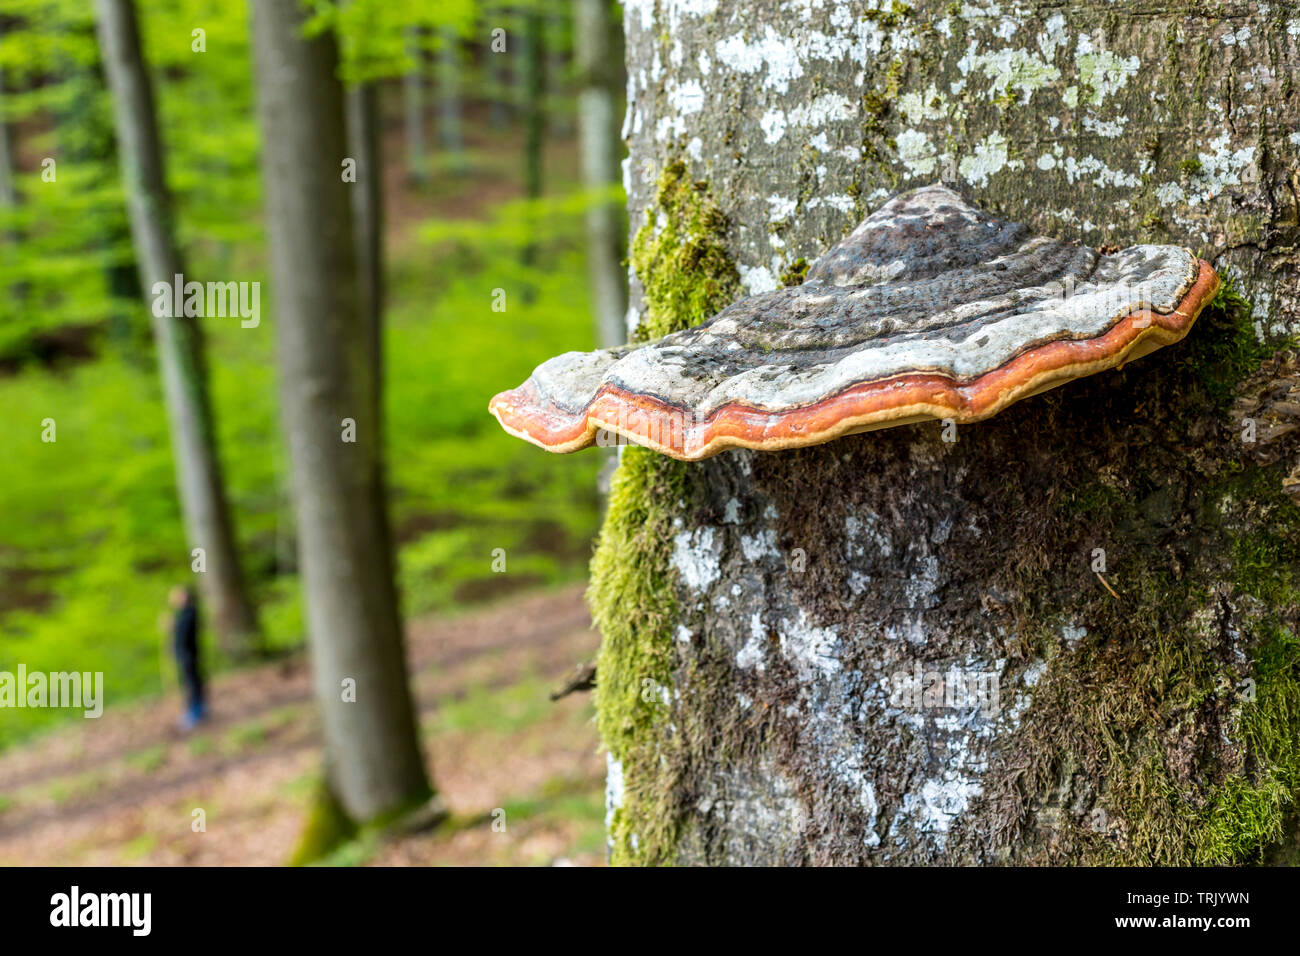 Polypore fungus mushroom growing on beech tree trunk Stock Photo